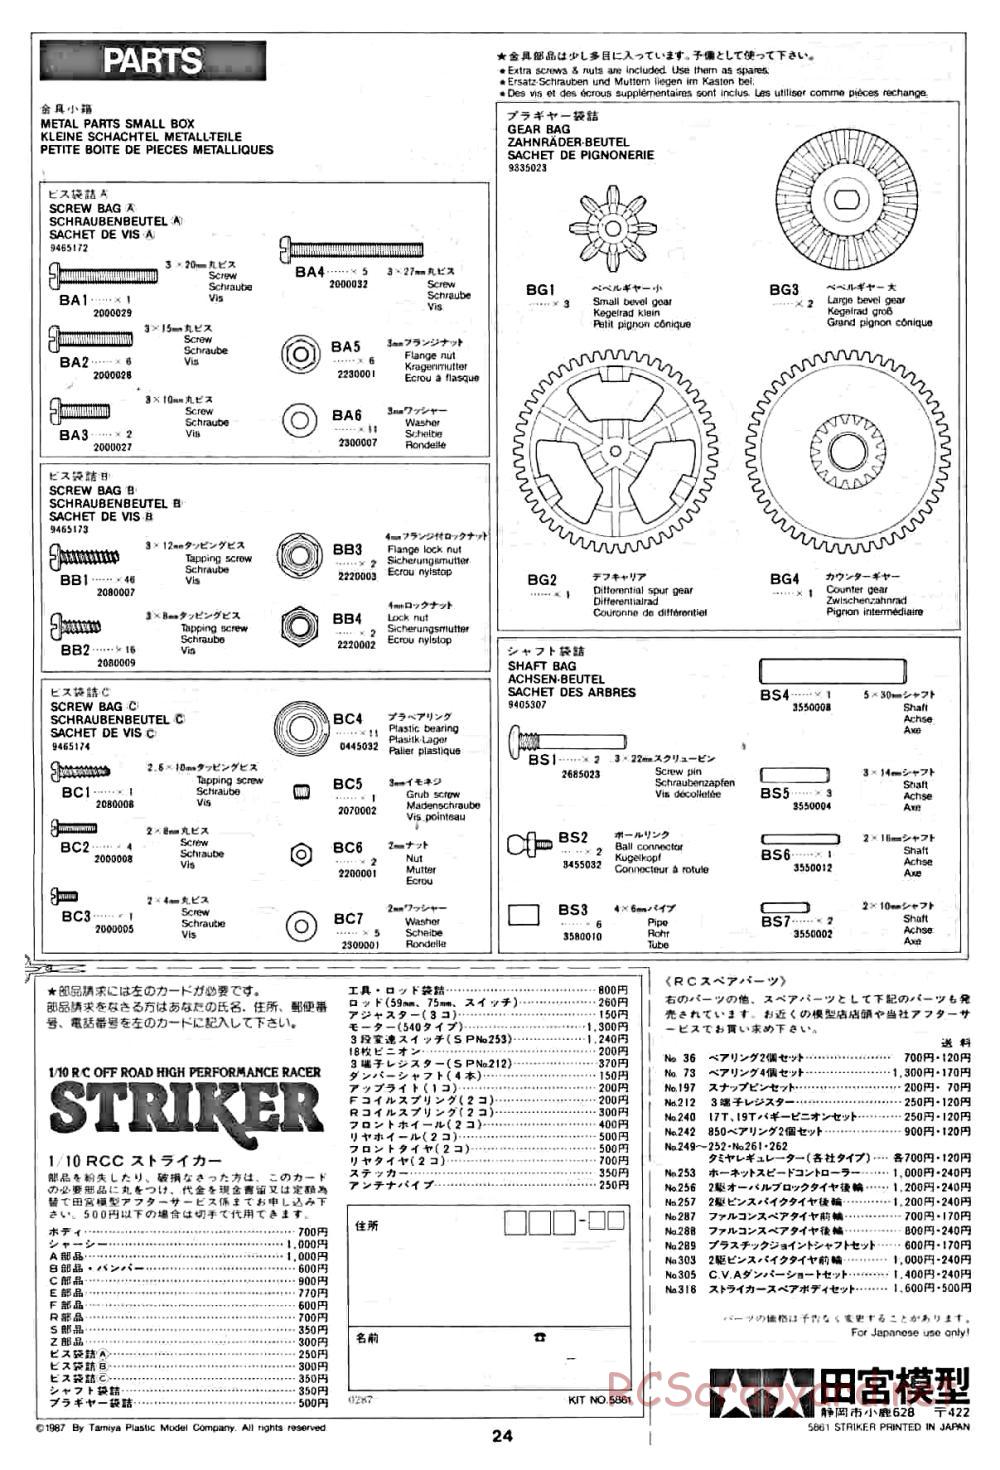 Tamiya - Striker - 58061 - Manual - Page 24